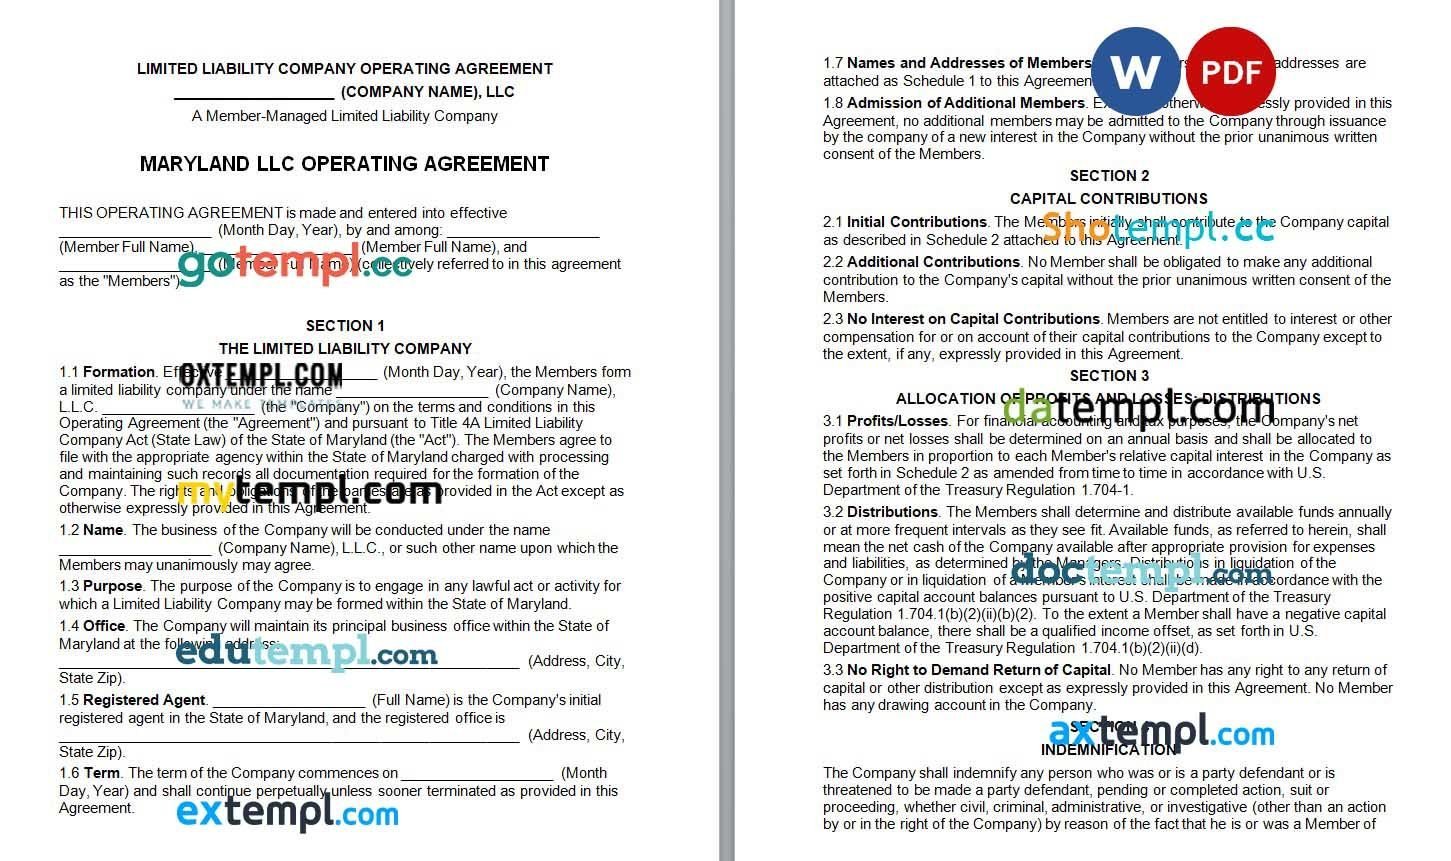 Maryland Multi-Member LLC Operatin Agreement Word example